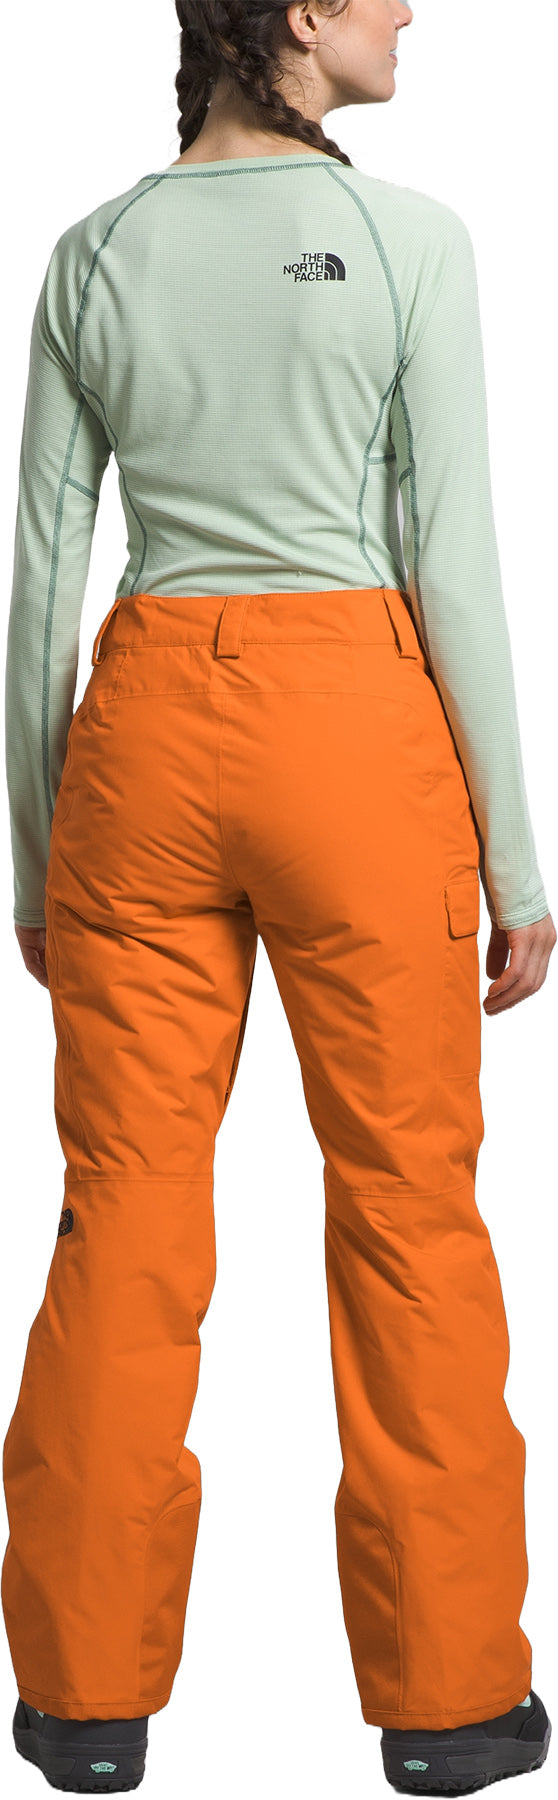 The North Face Freedom ski pant in orange